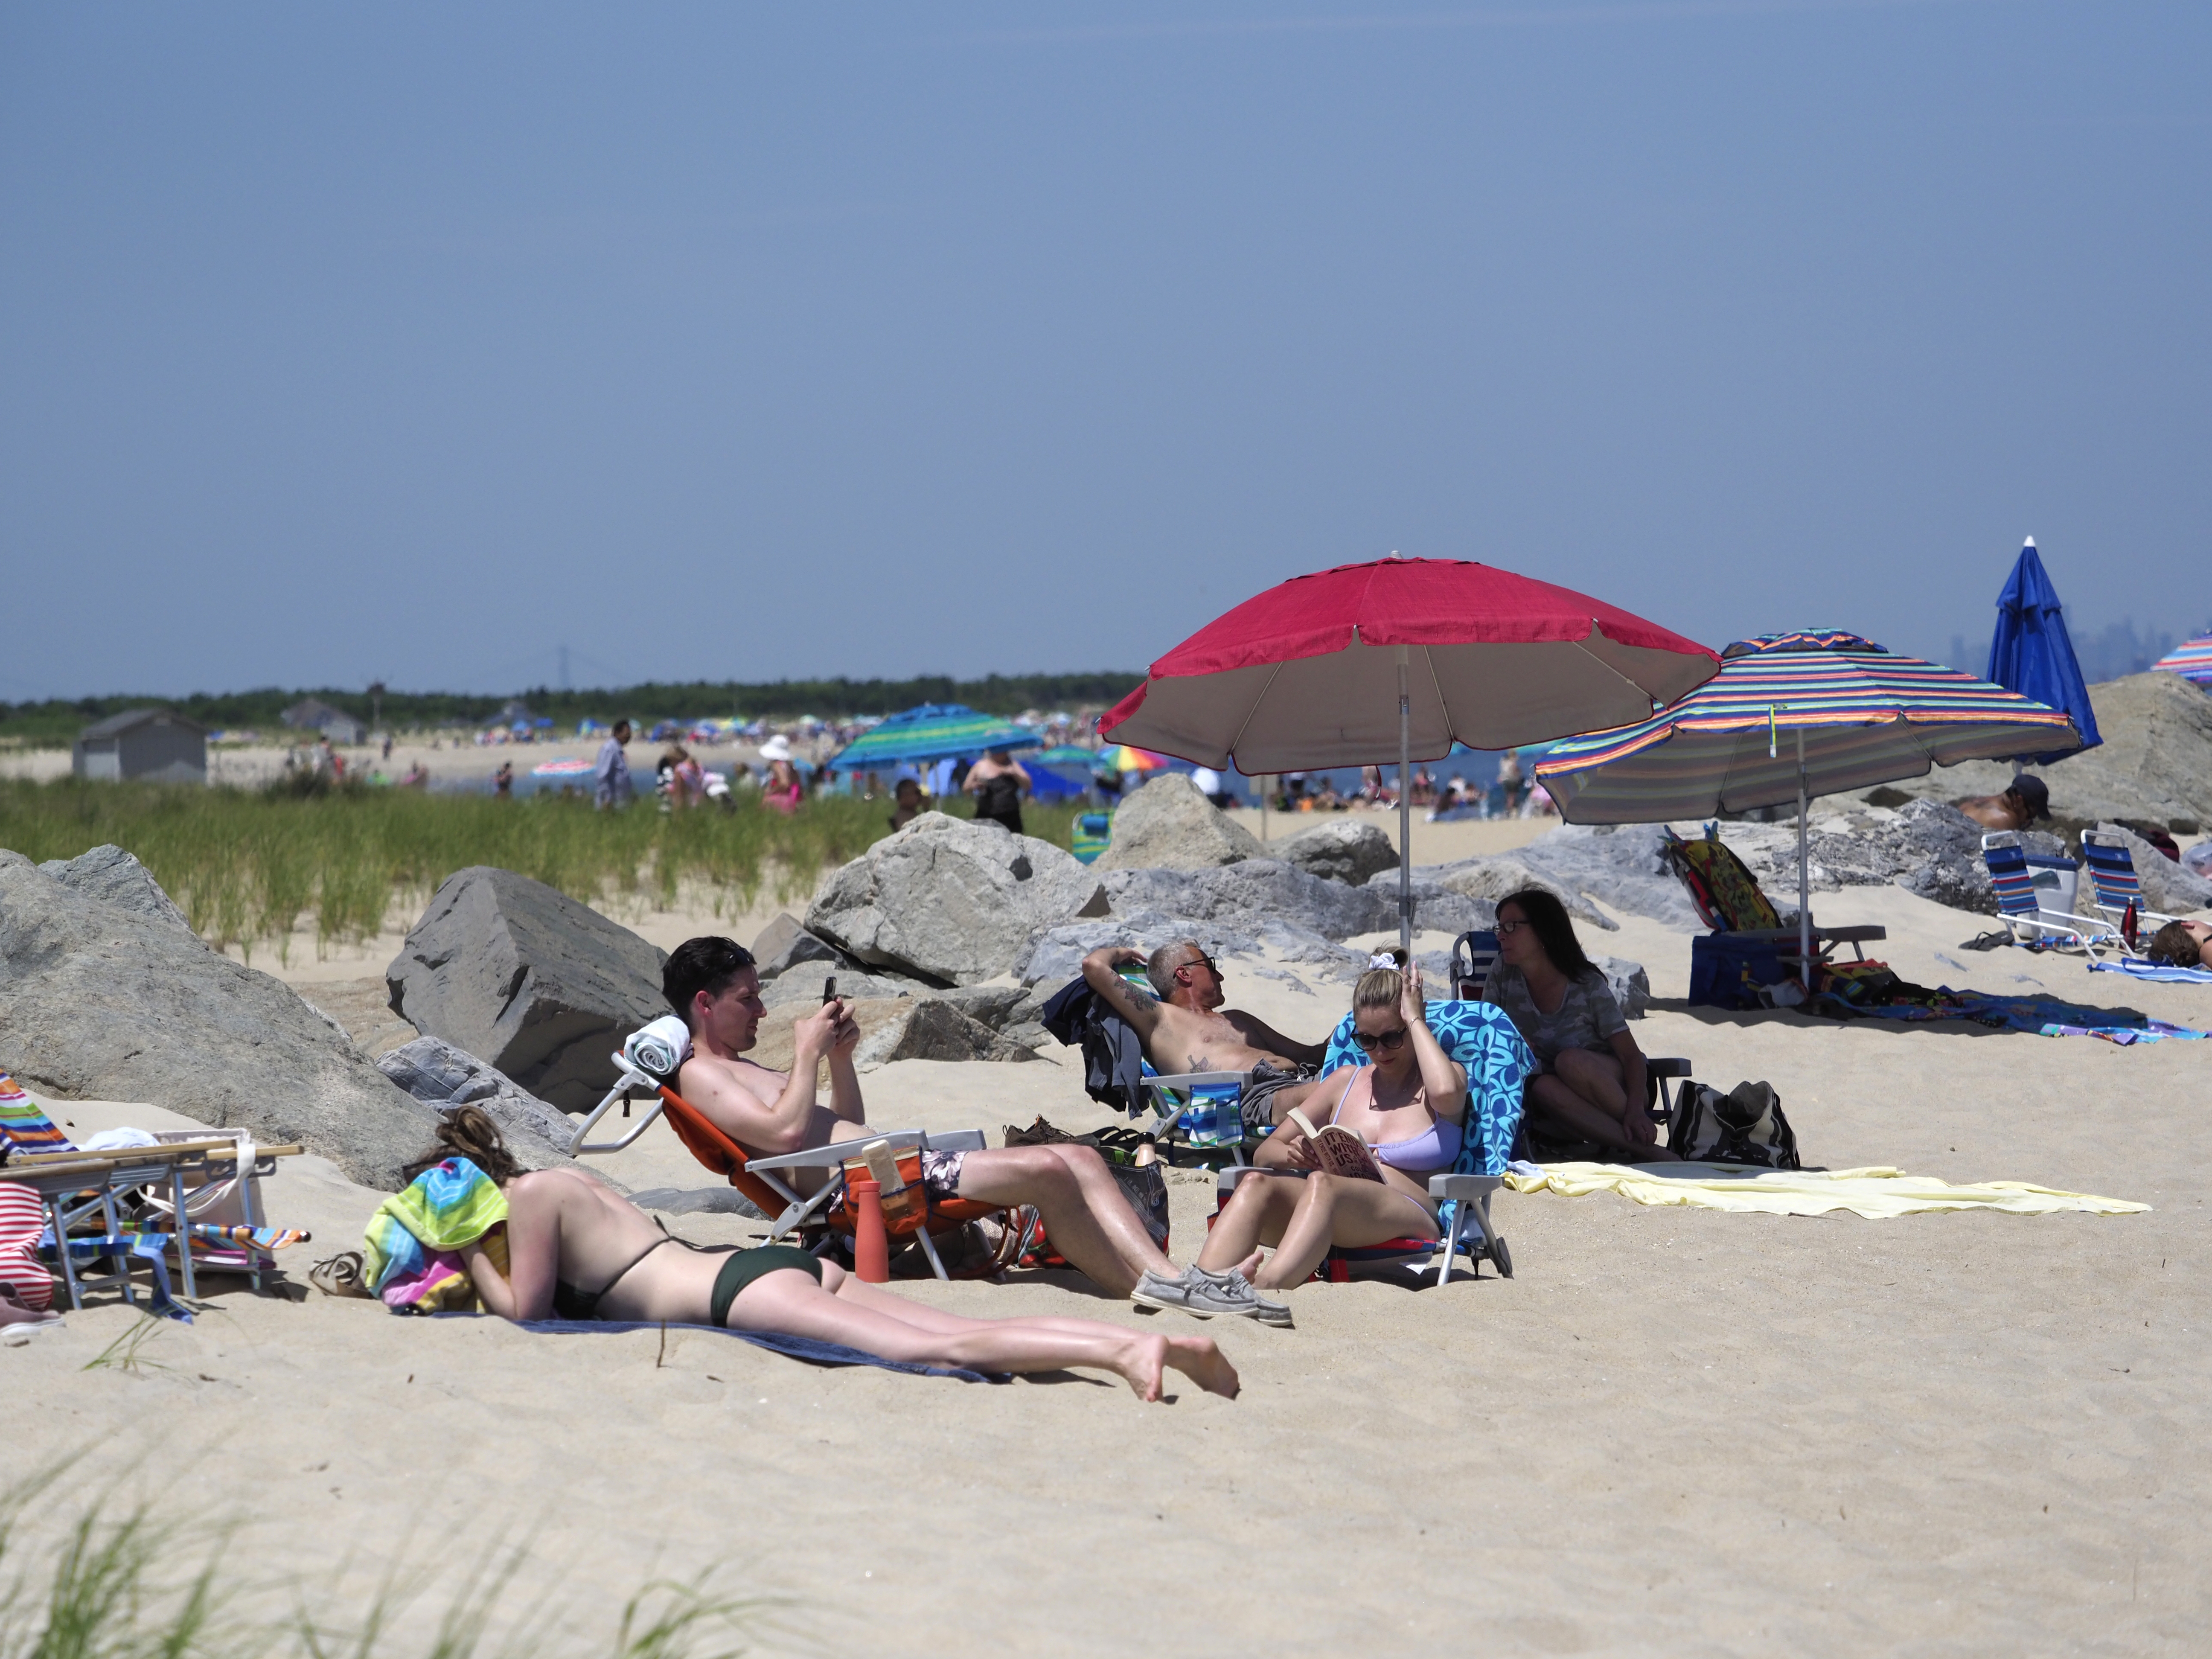 Nude Beach Sunbathing - Top nude beach list names New Jersey spot among best worldwide - silive.com